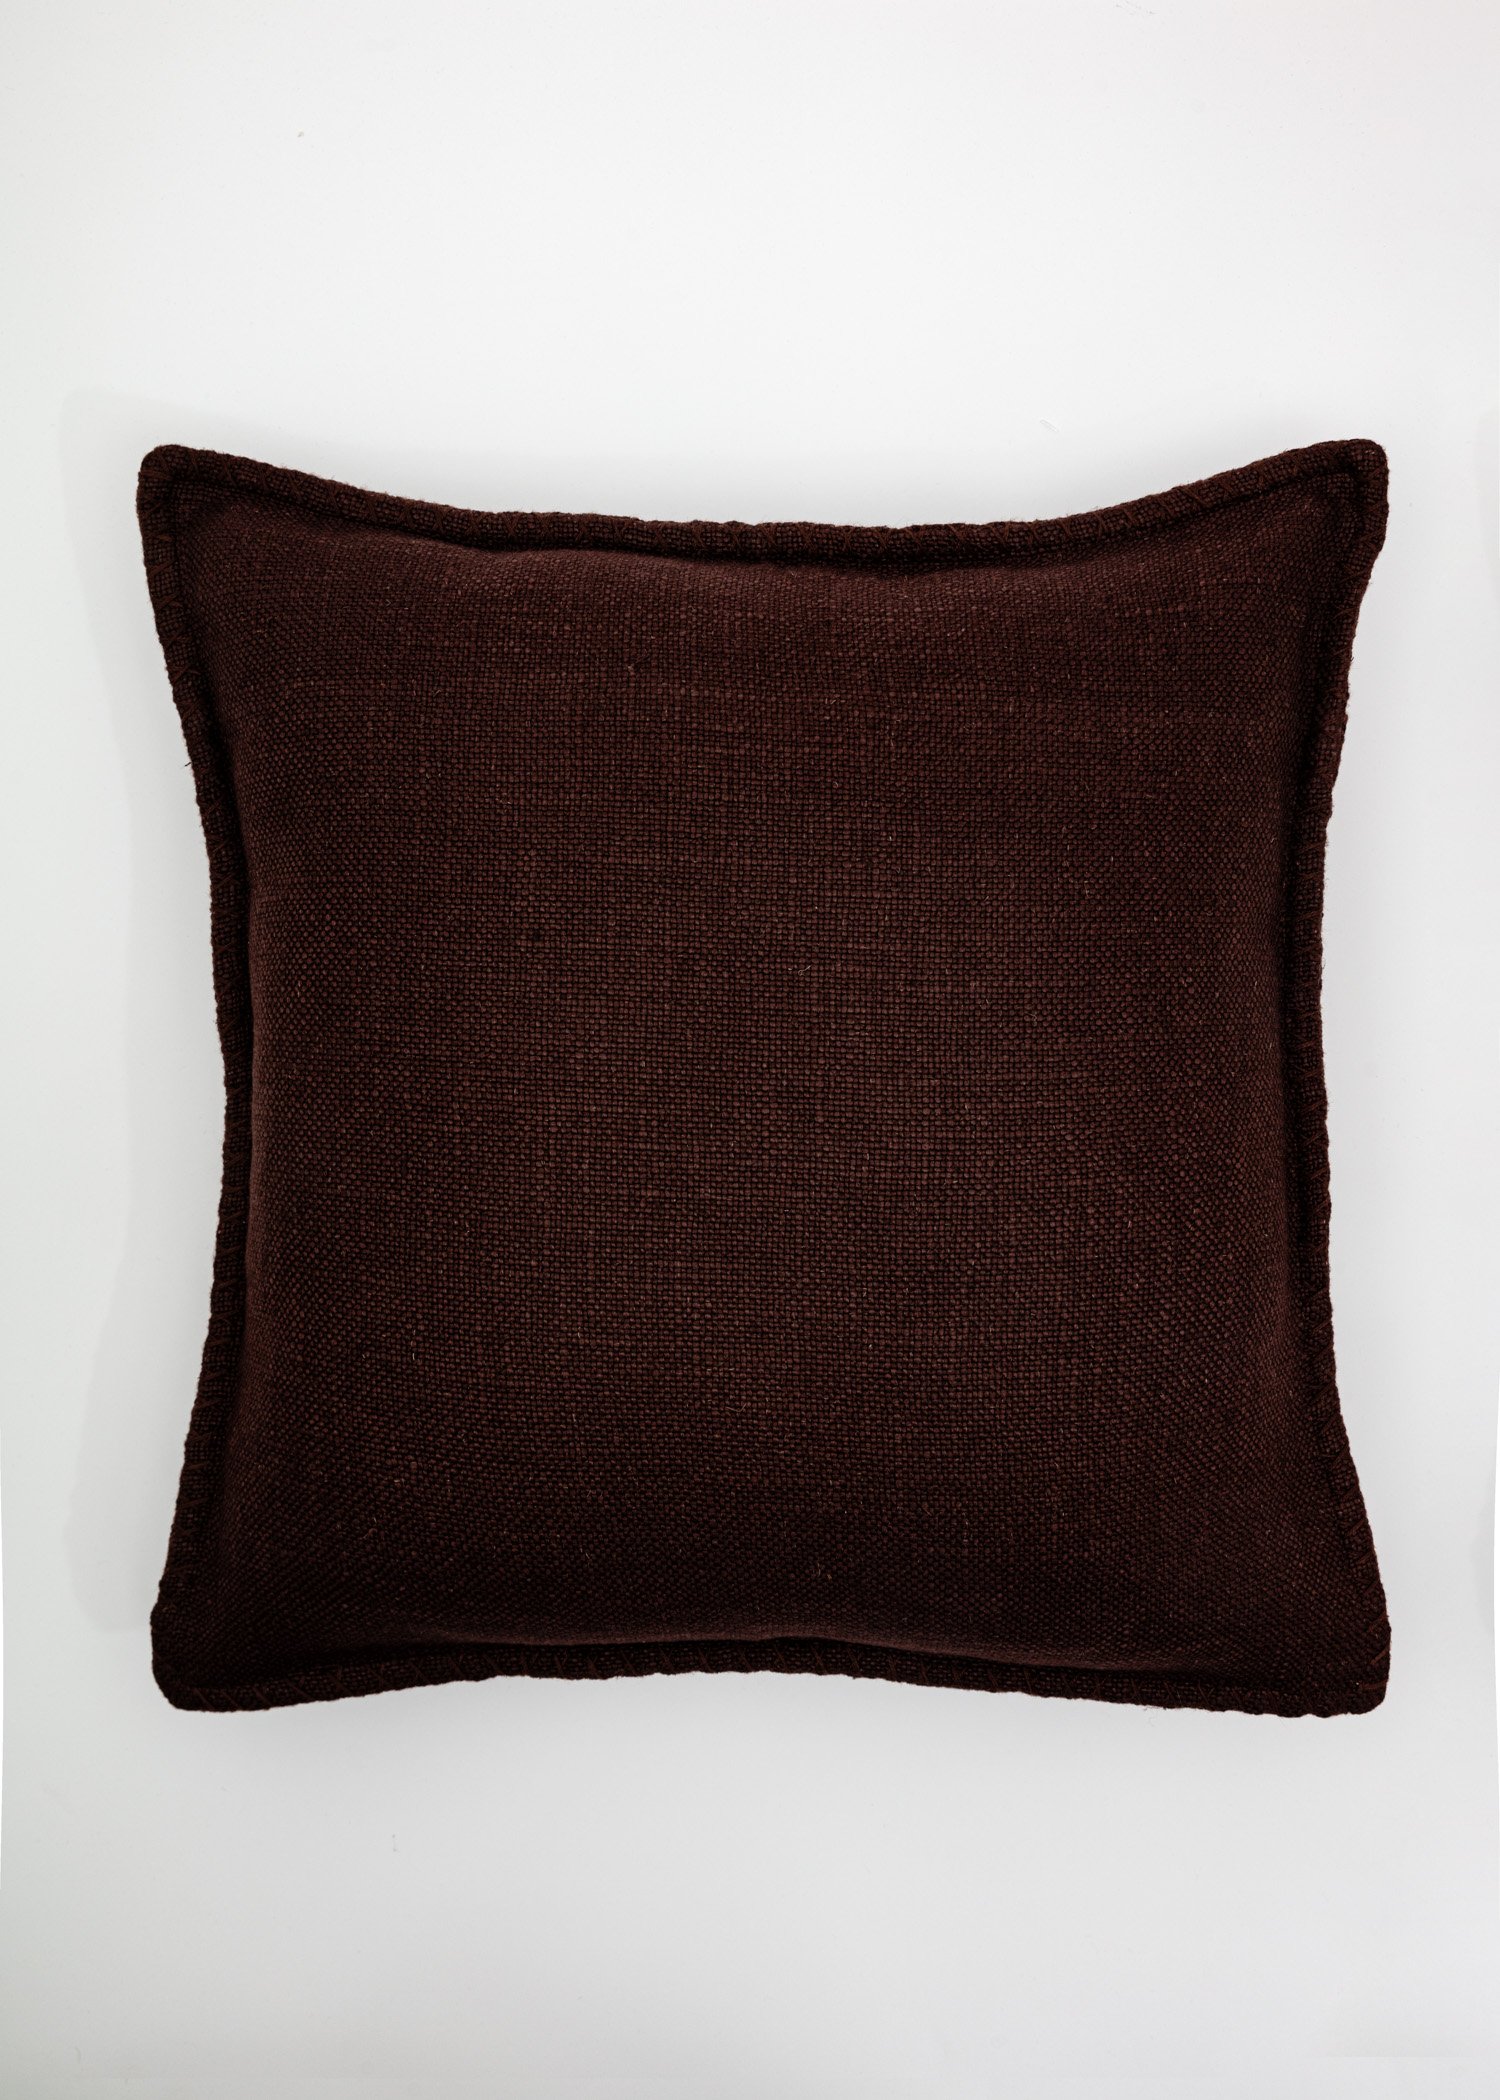 Brown decorative cushion cover